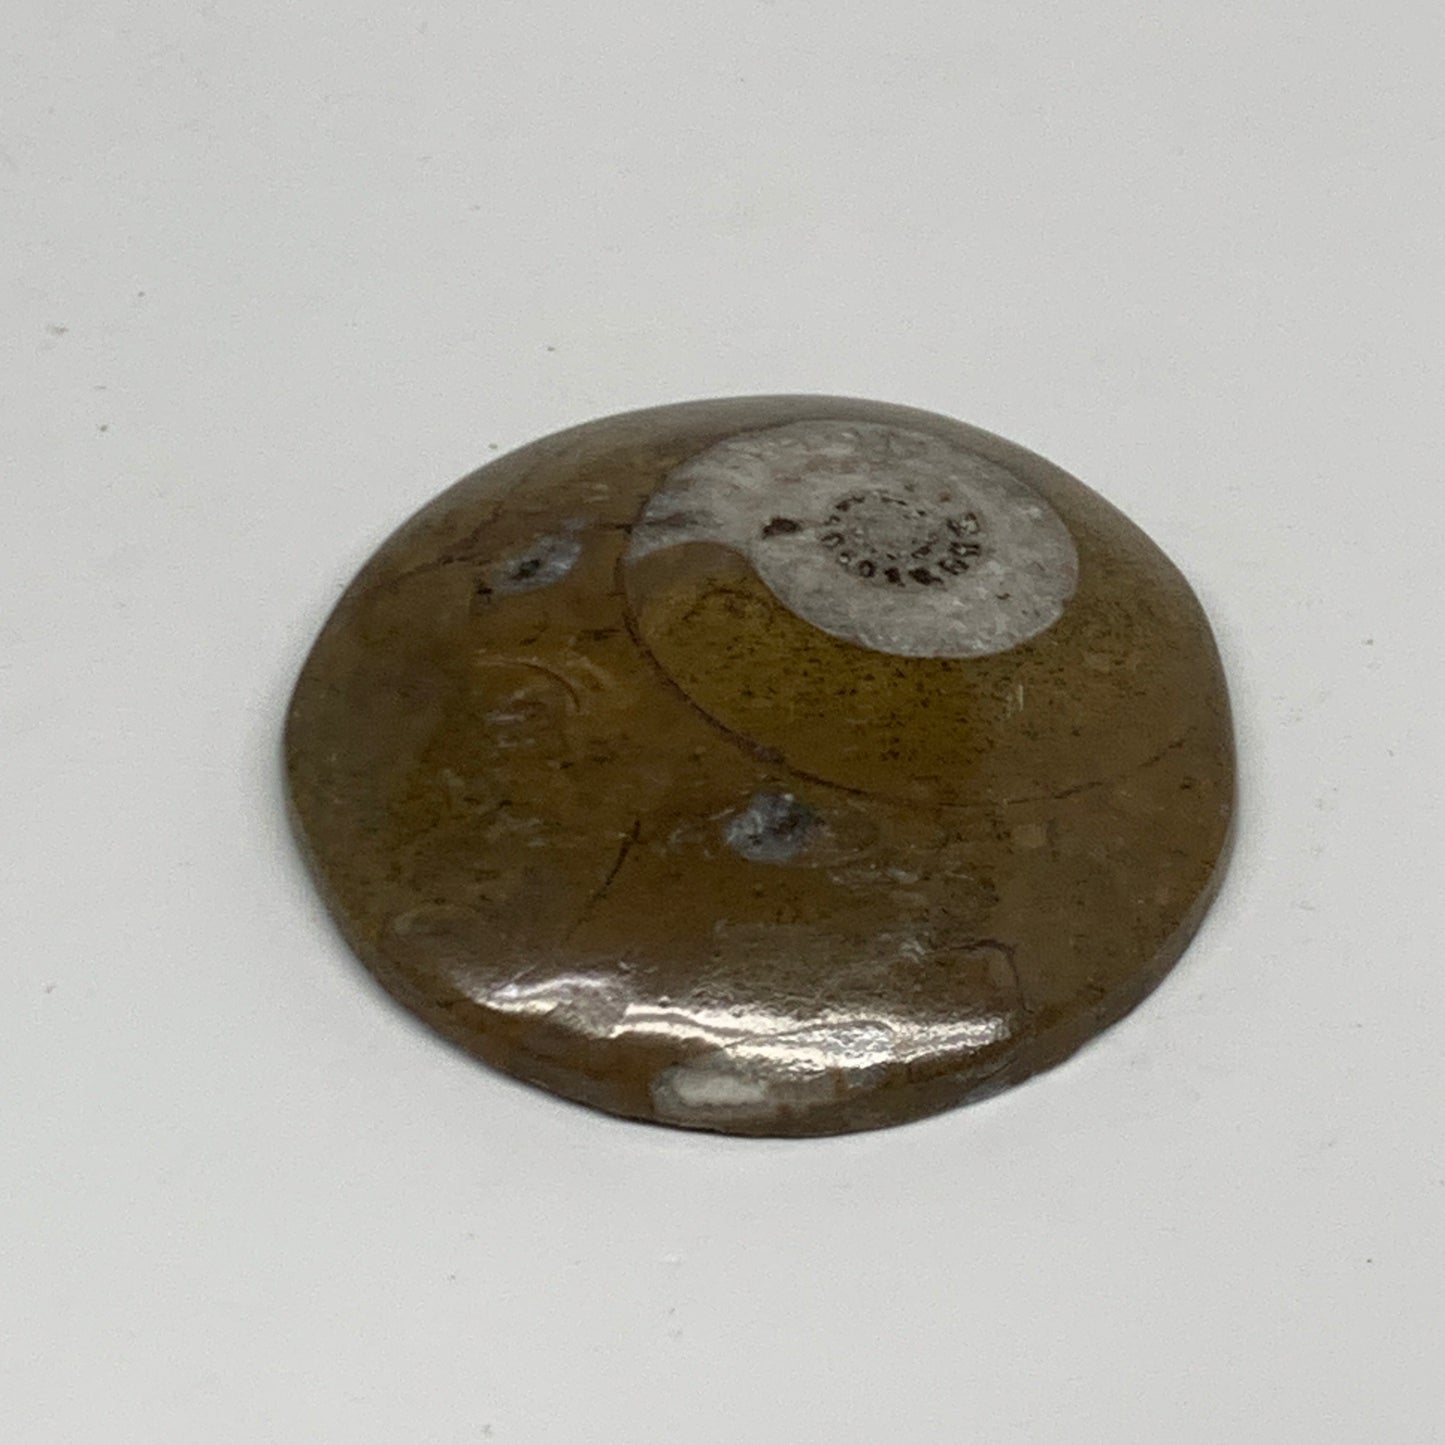 65.6g, 2.5"x2.4"x0.5", Goniatite (Button) Ammonite Polished Fossils, B30068